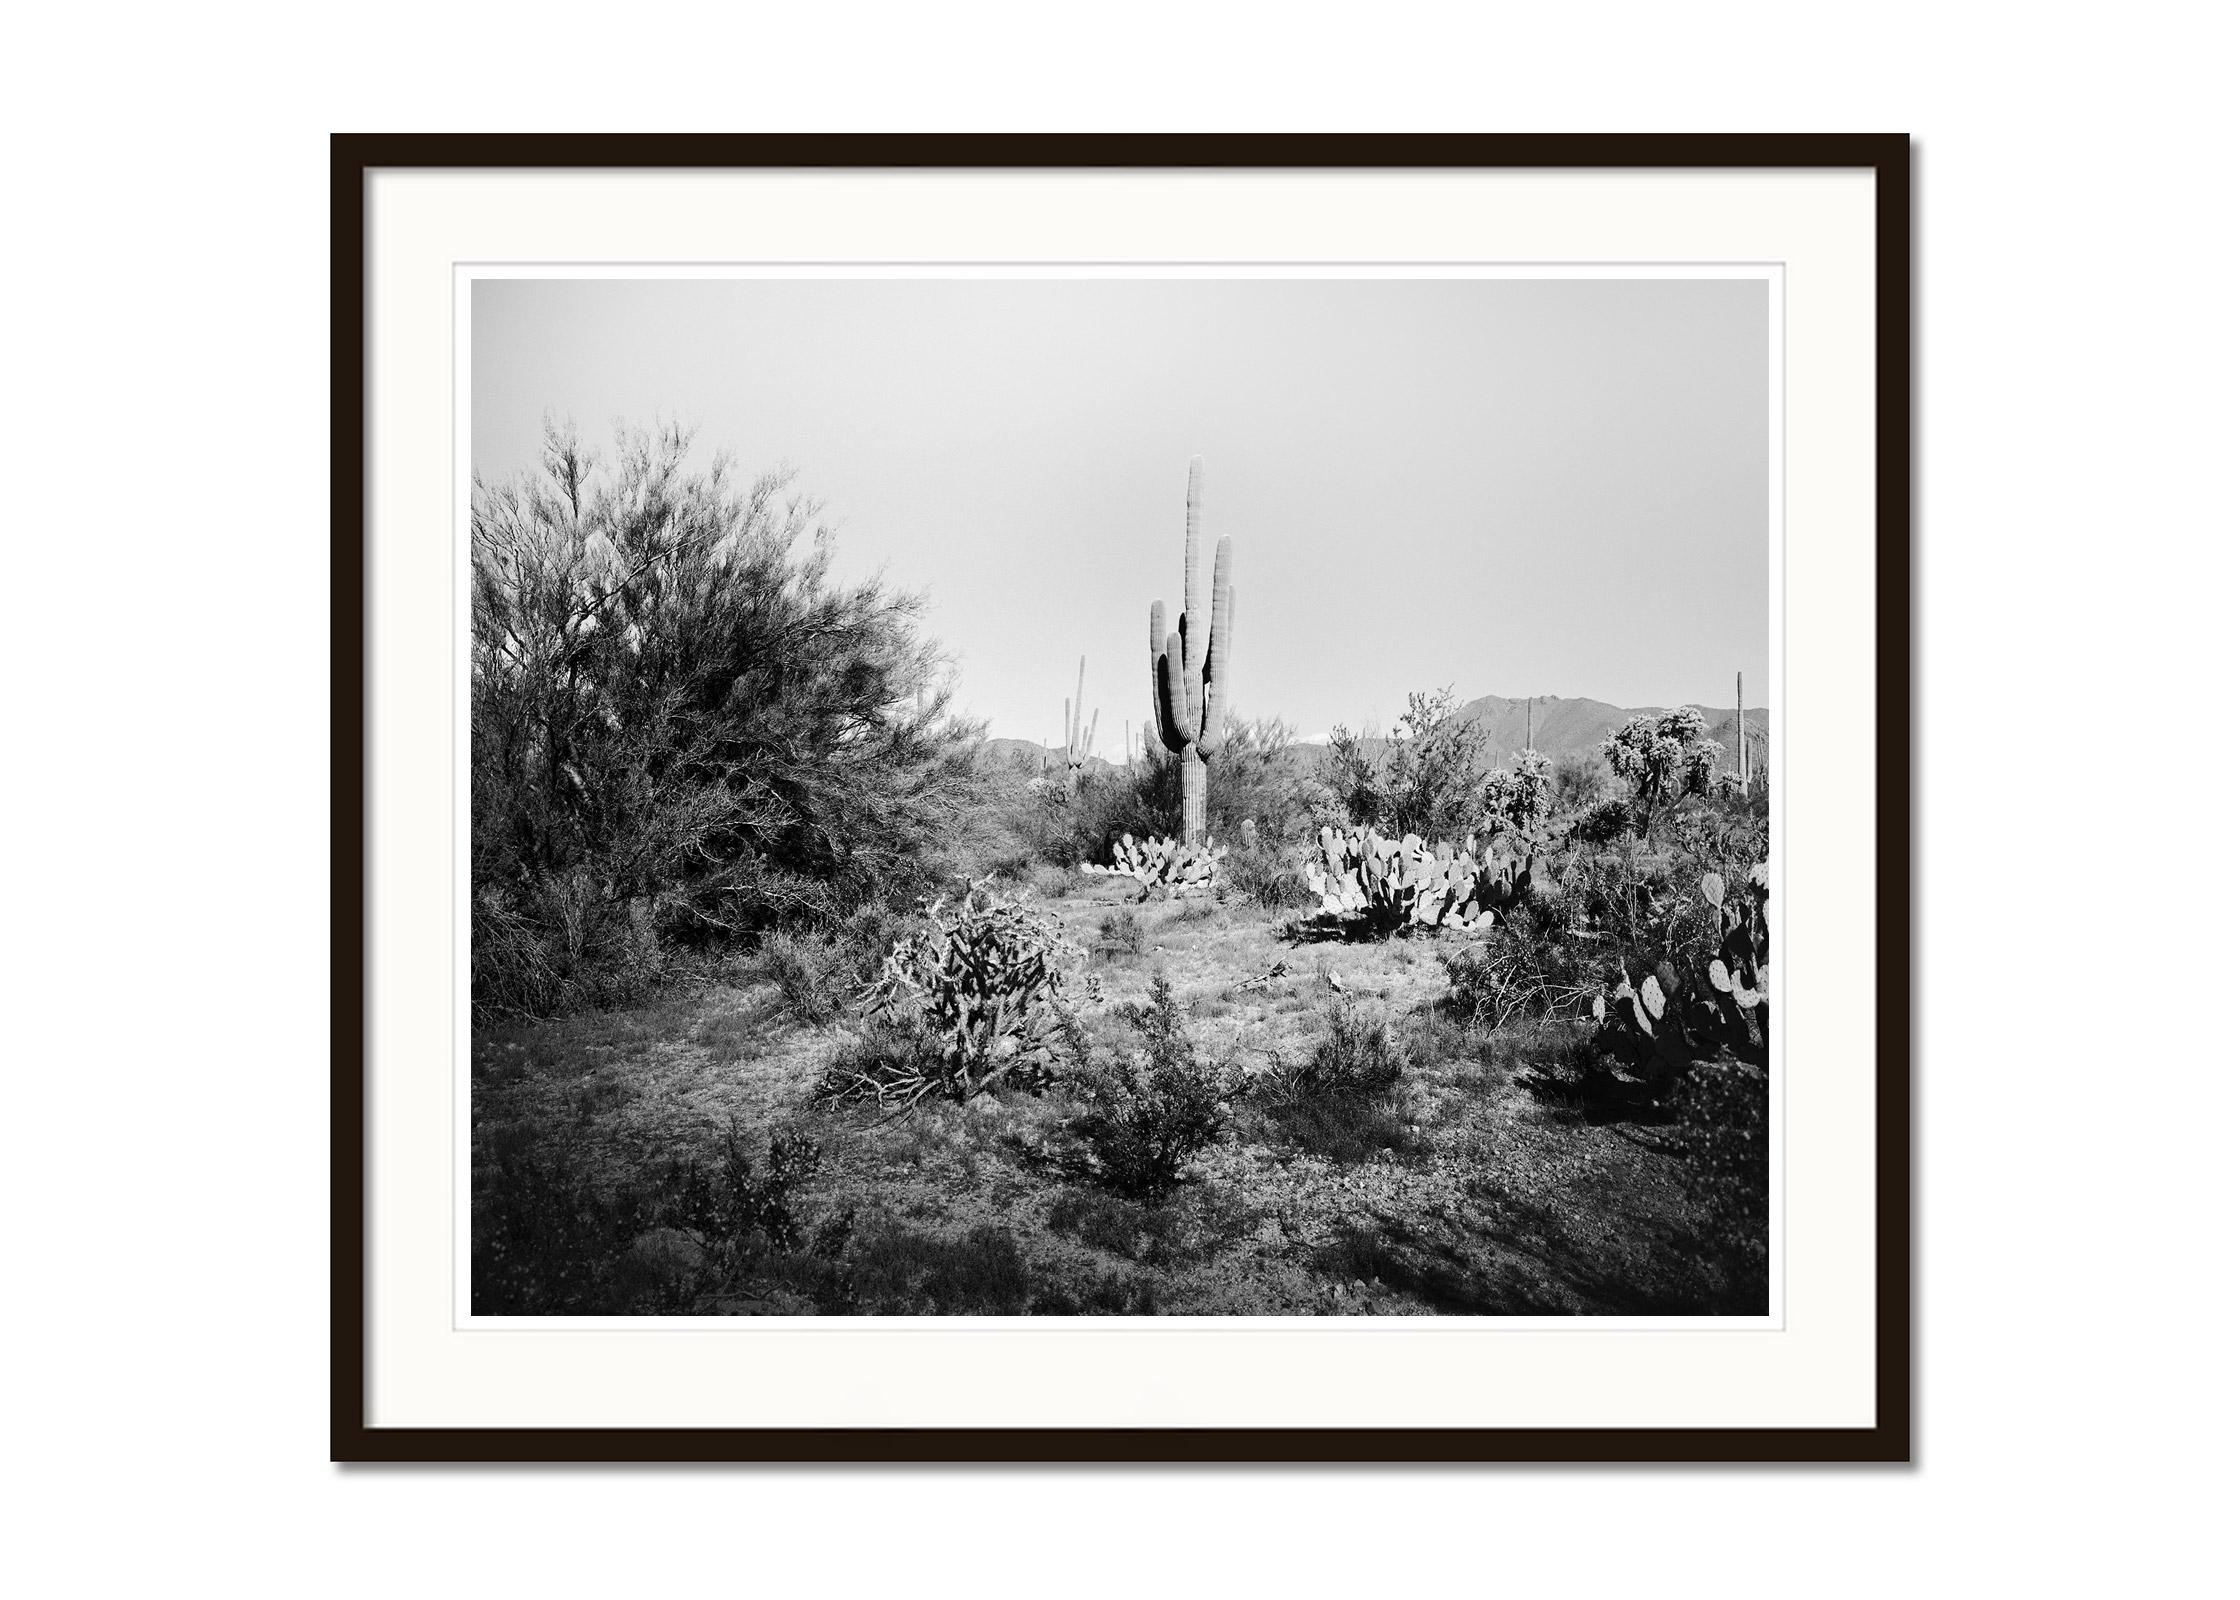 Saguaro Cactus, National Park, Arizona, USA, black and white landscape photo - Gray Black and White Photograph by Gerald Berghammer